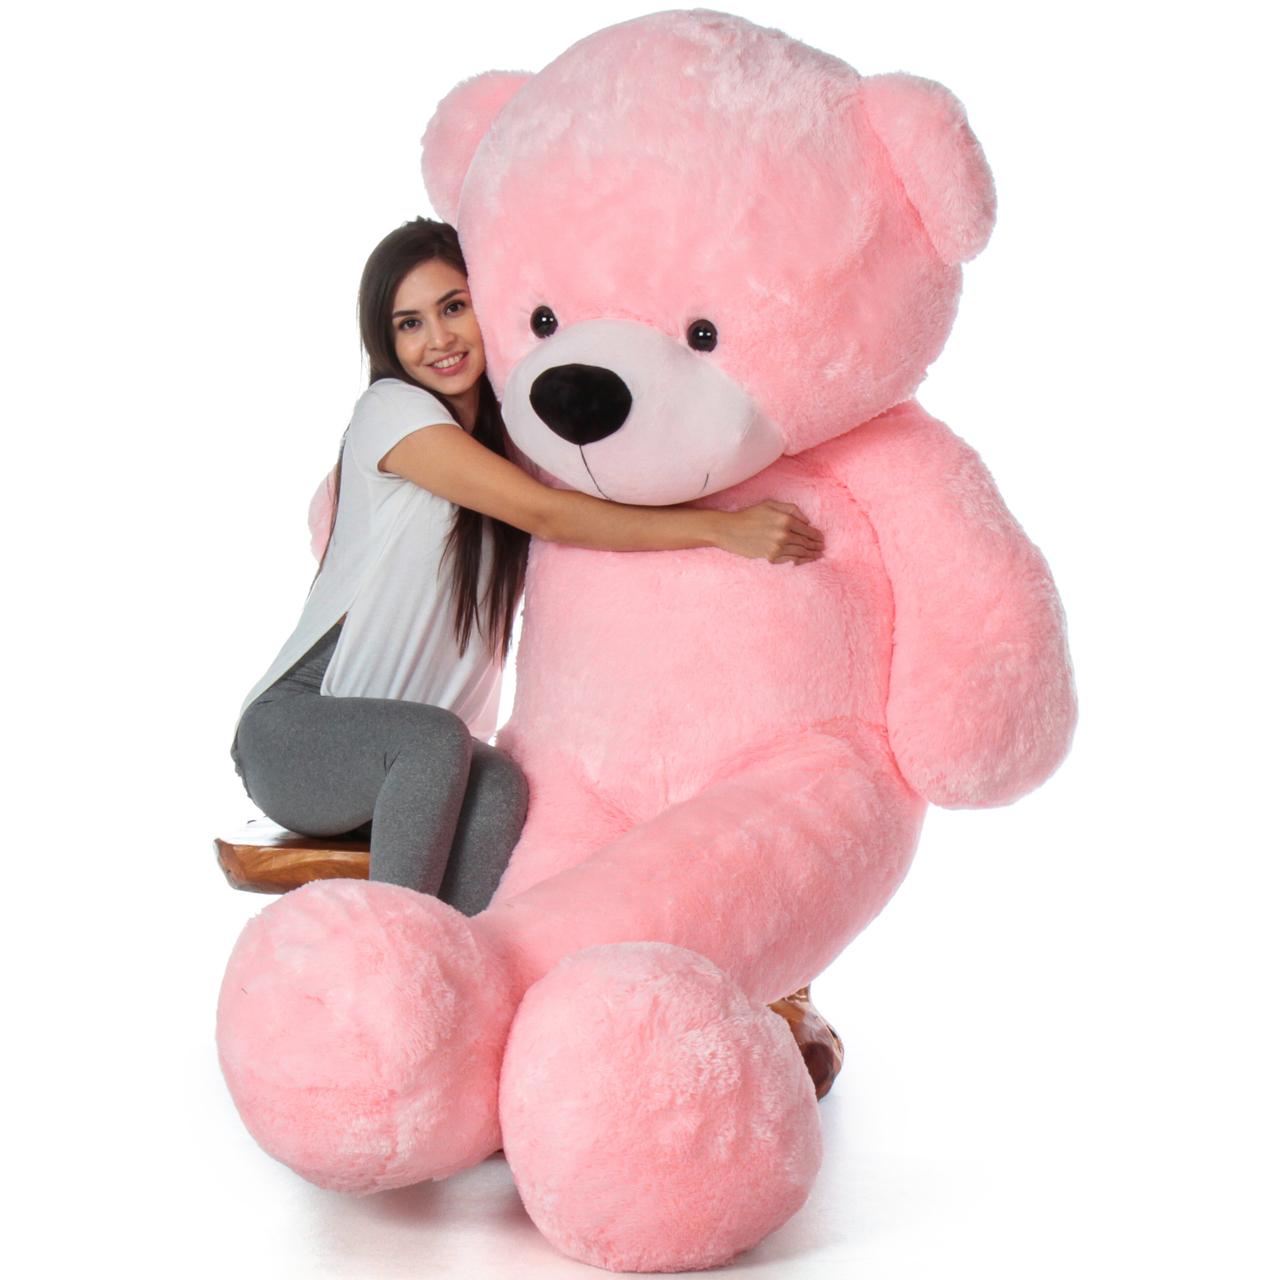 where to get a giant teddy bear